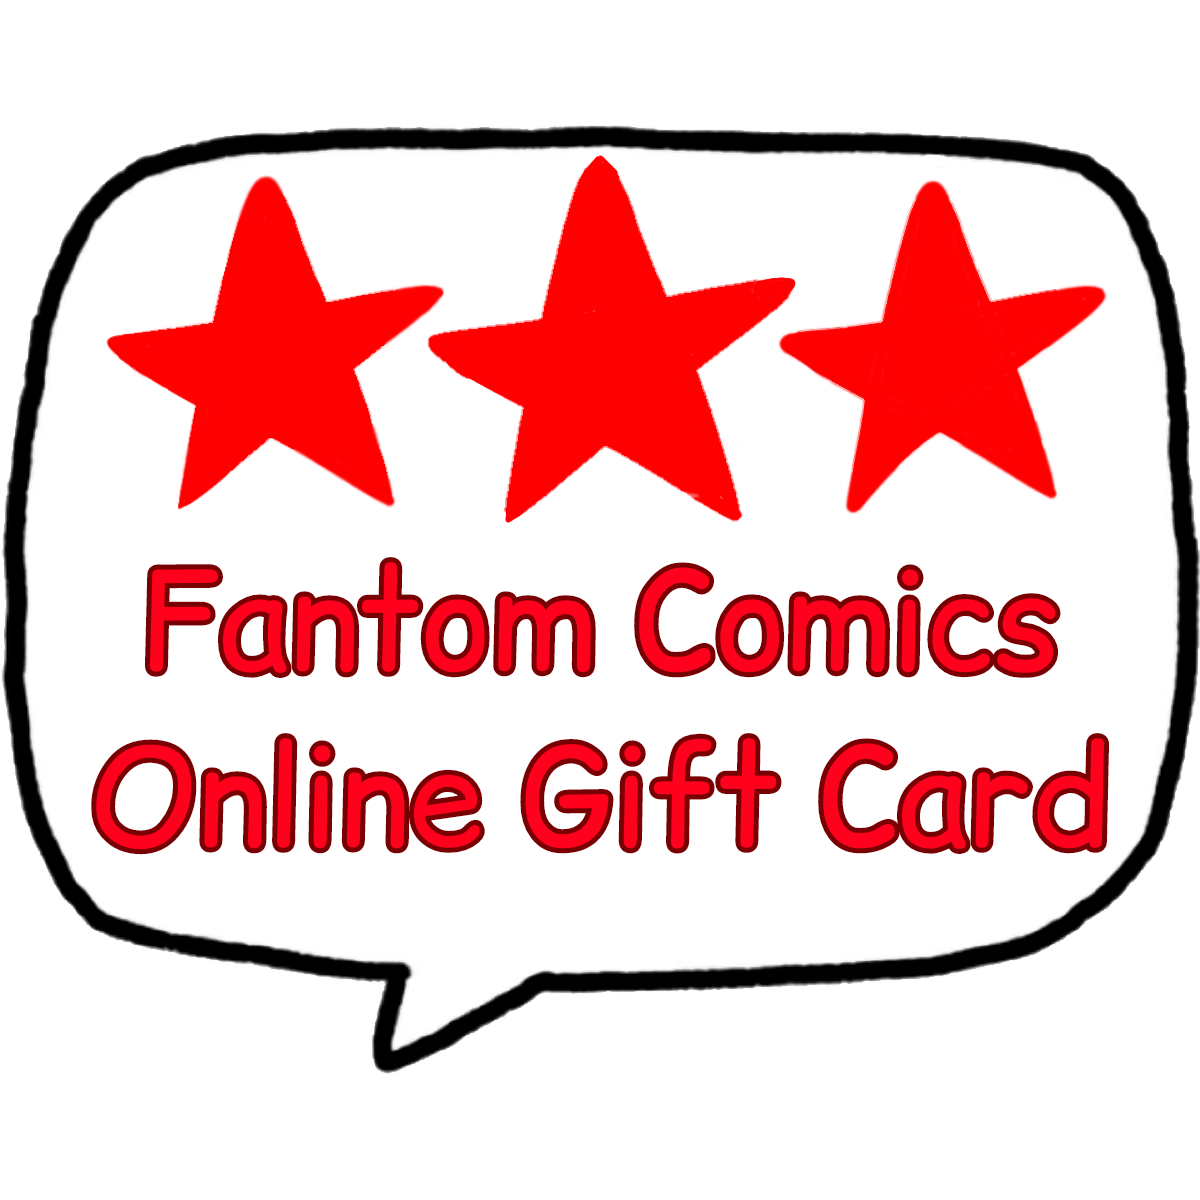 $50 Fantom Comics Online Gift Card